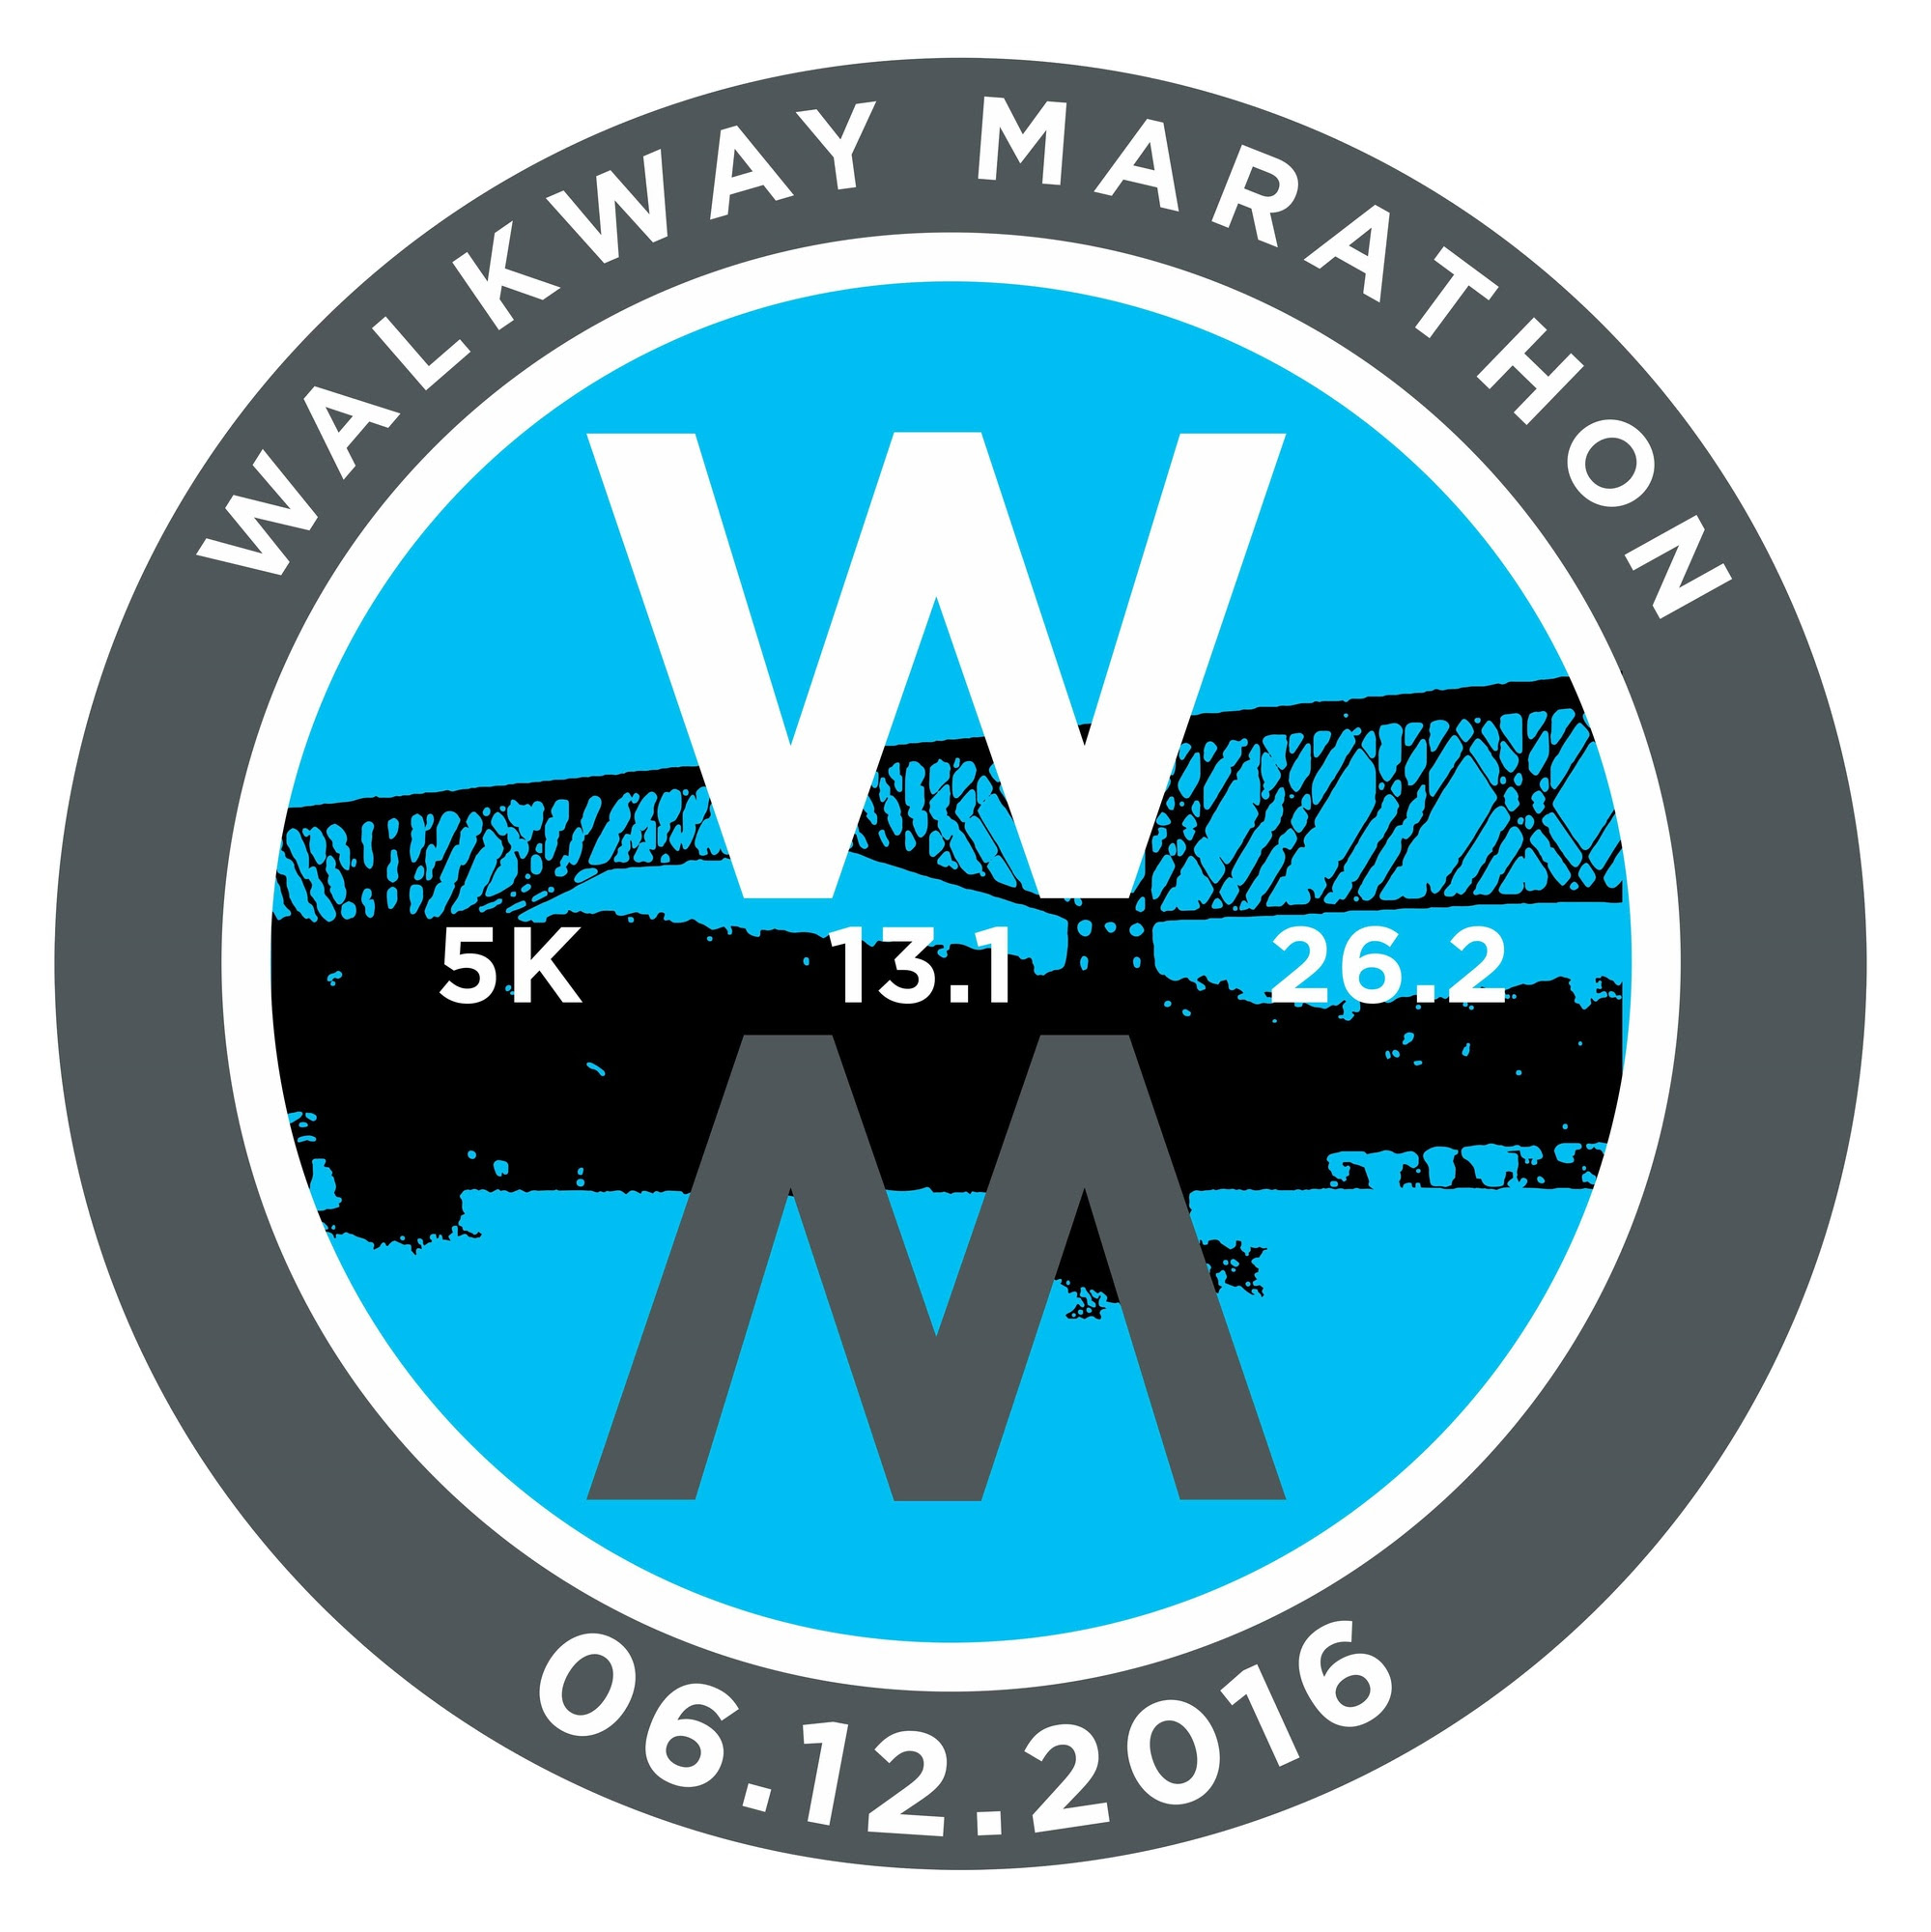 2016 Walkway Marathon